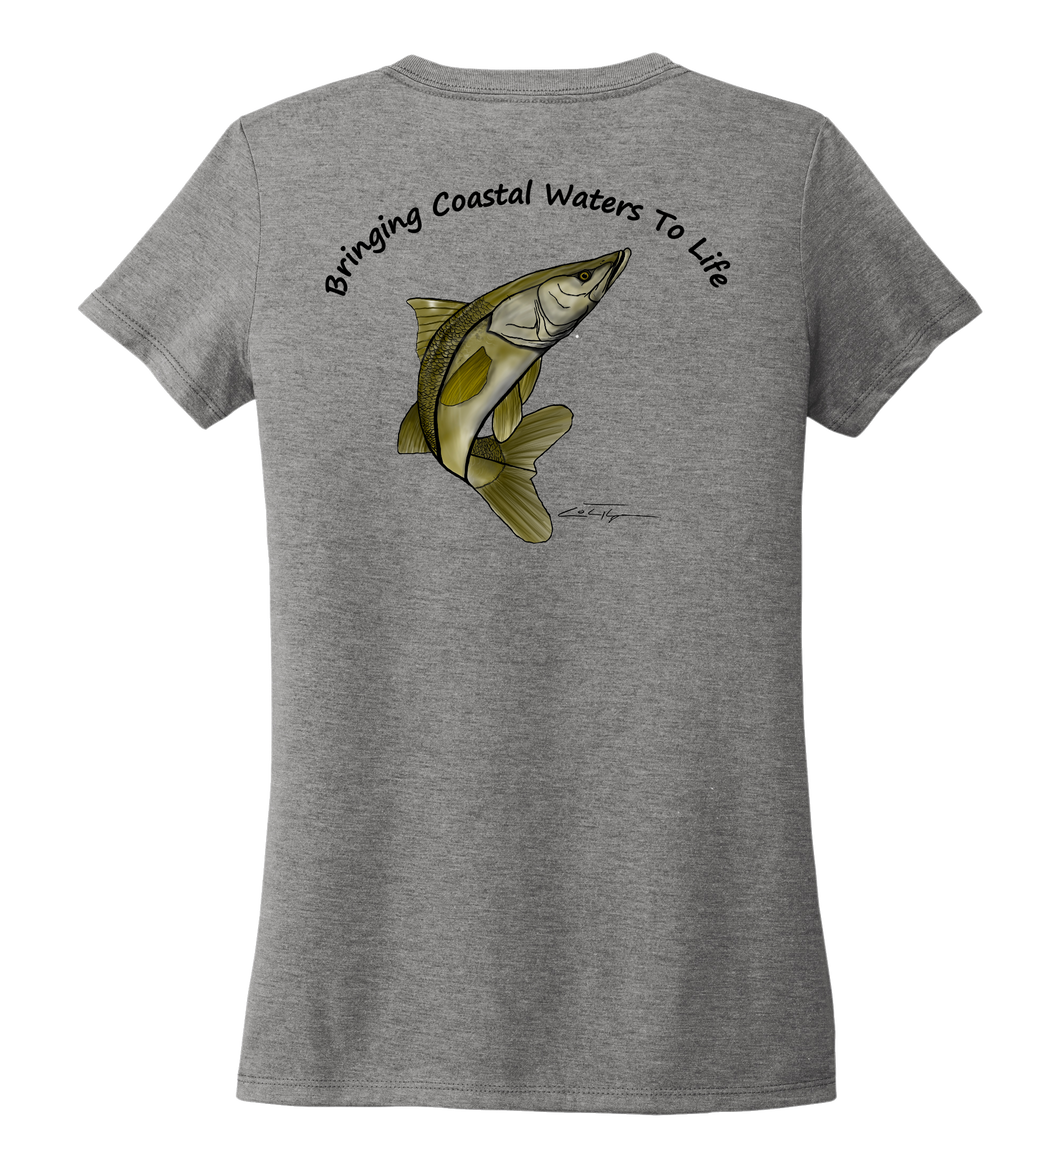 Ocean Habitats & Colin Thompson Collaboration - Women's V-neck T-shirt in Oyster Grey